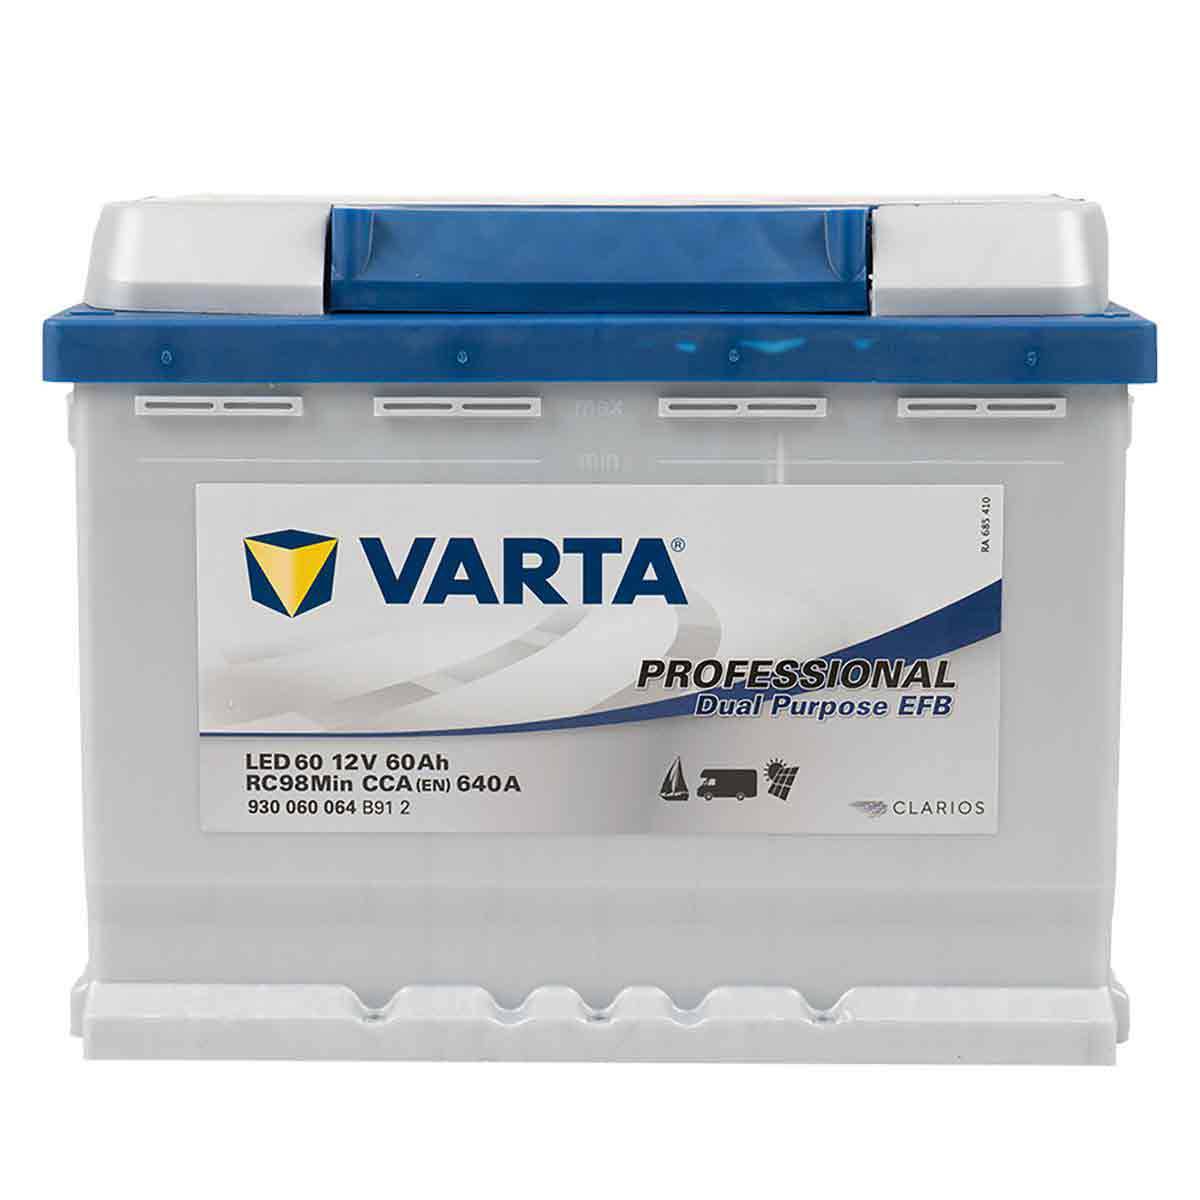 Varta LED60 EFB Dual Purpose Leisure Battery 12V 60Ah 930060068